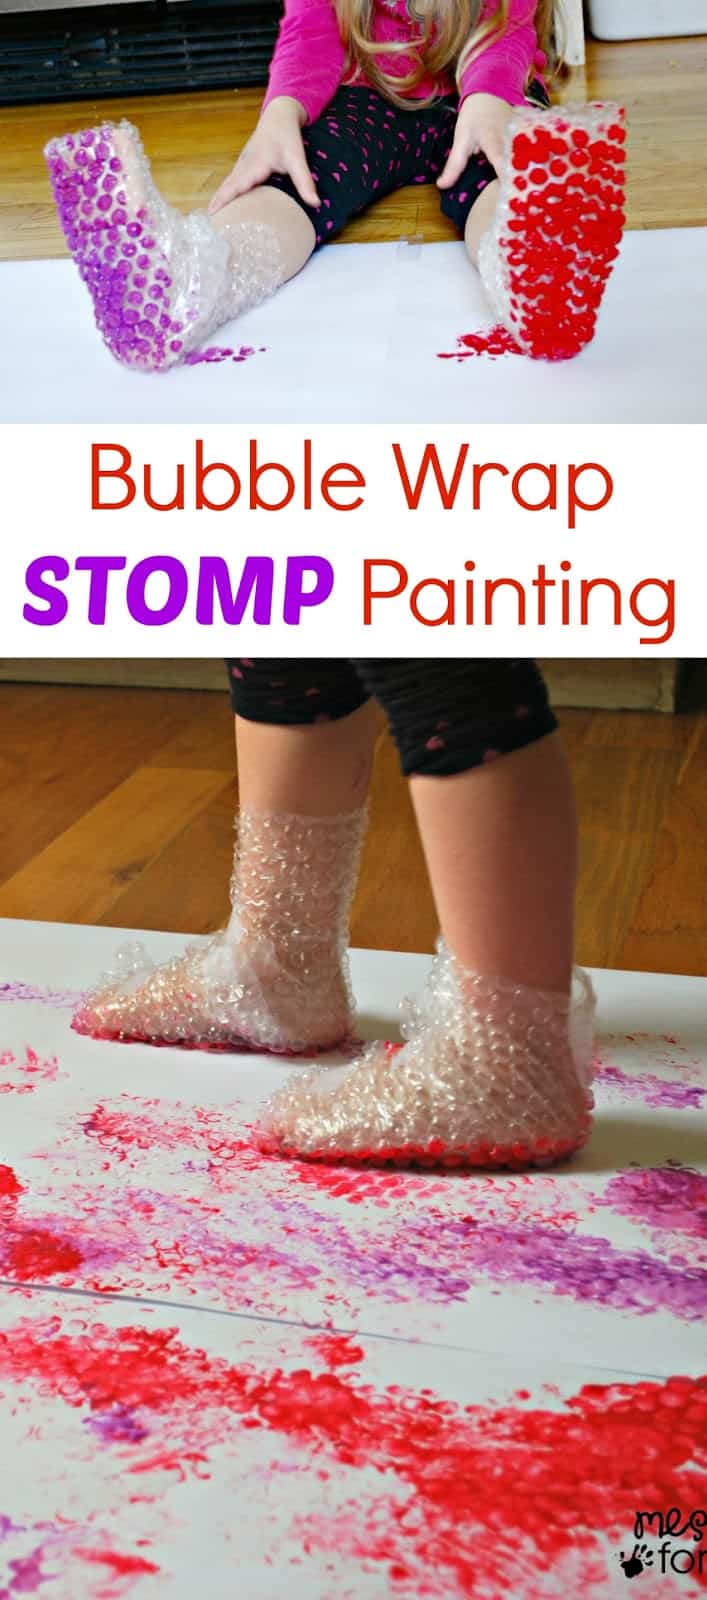 Bubble Wrap Stomp Painting